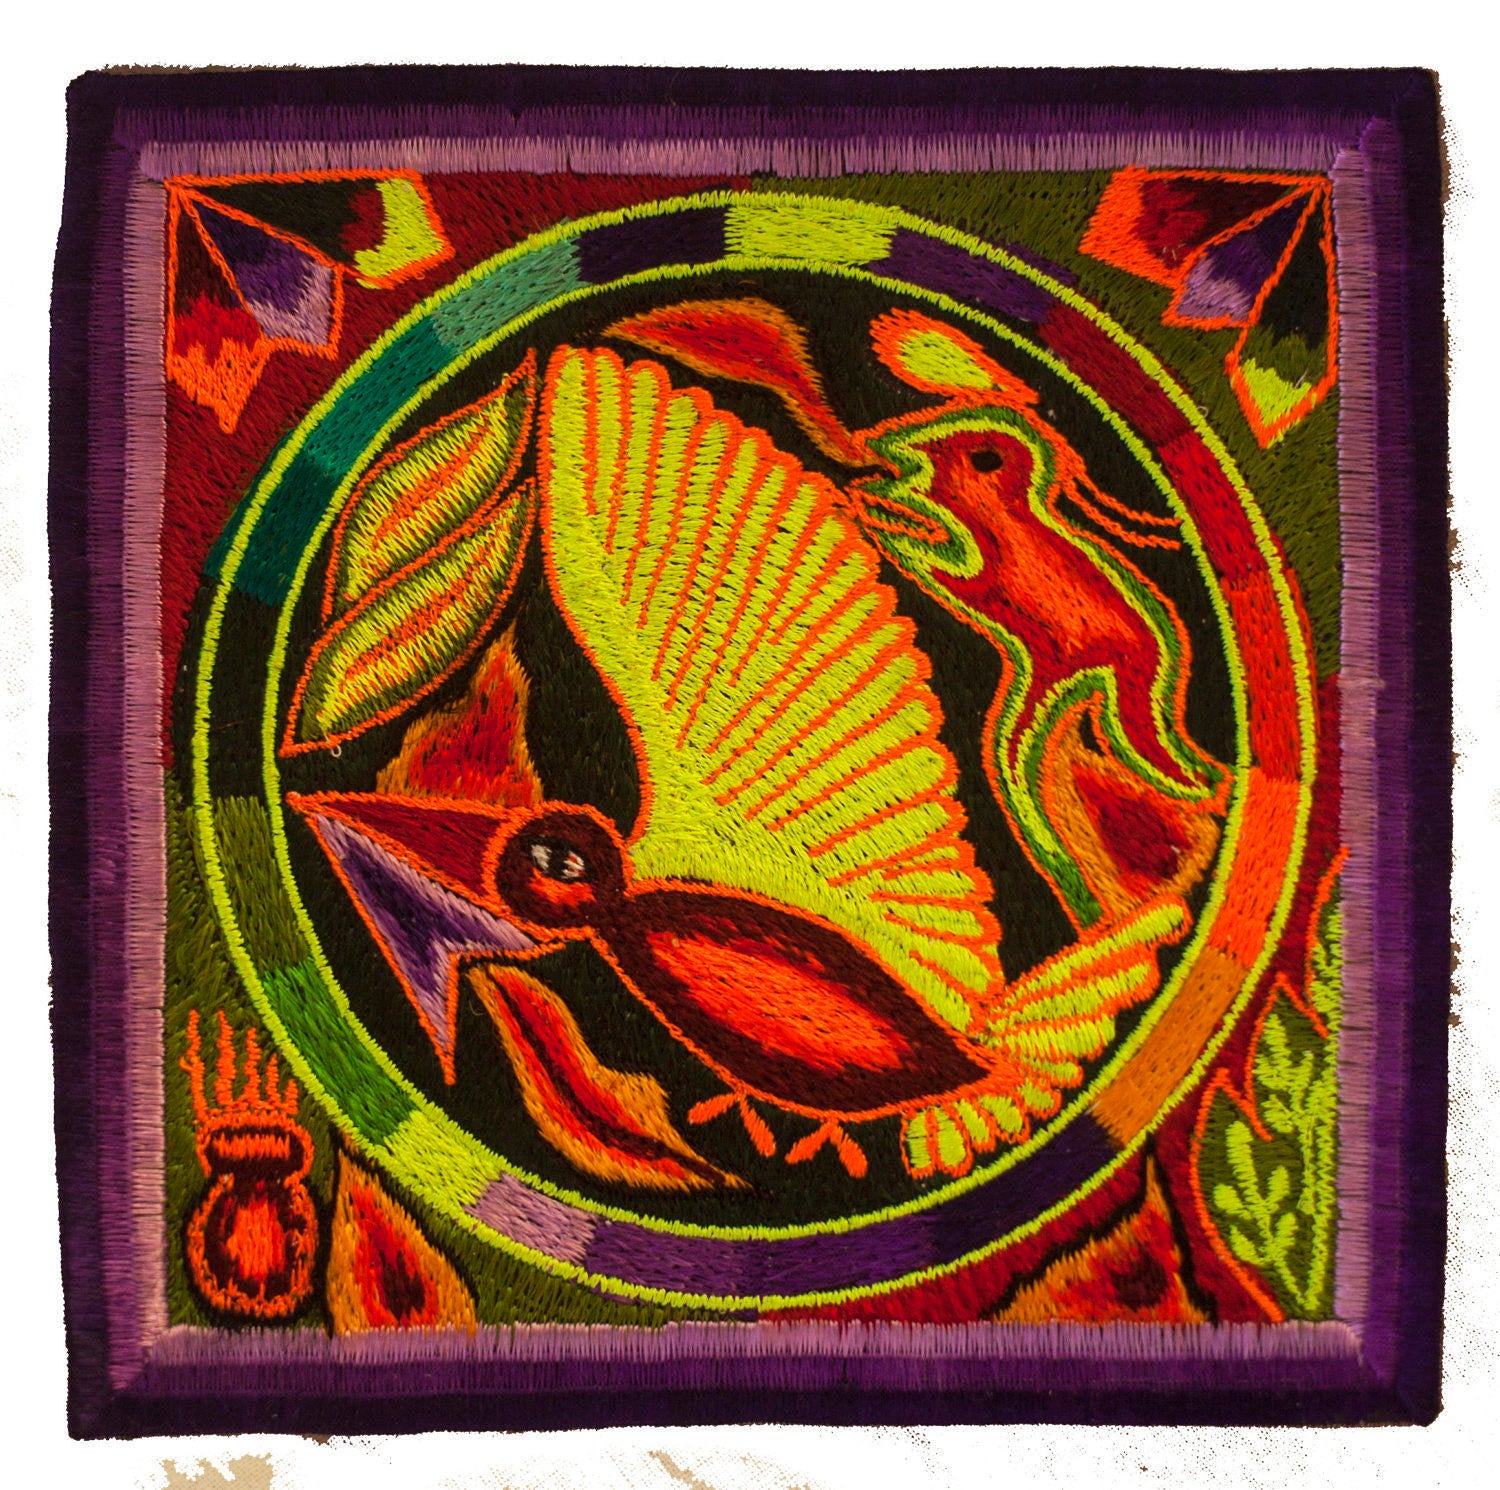 Peyote Spirit embroidery - indigene mexican Huichol shaman artwork